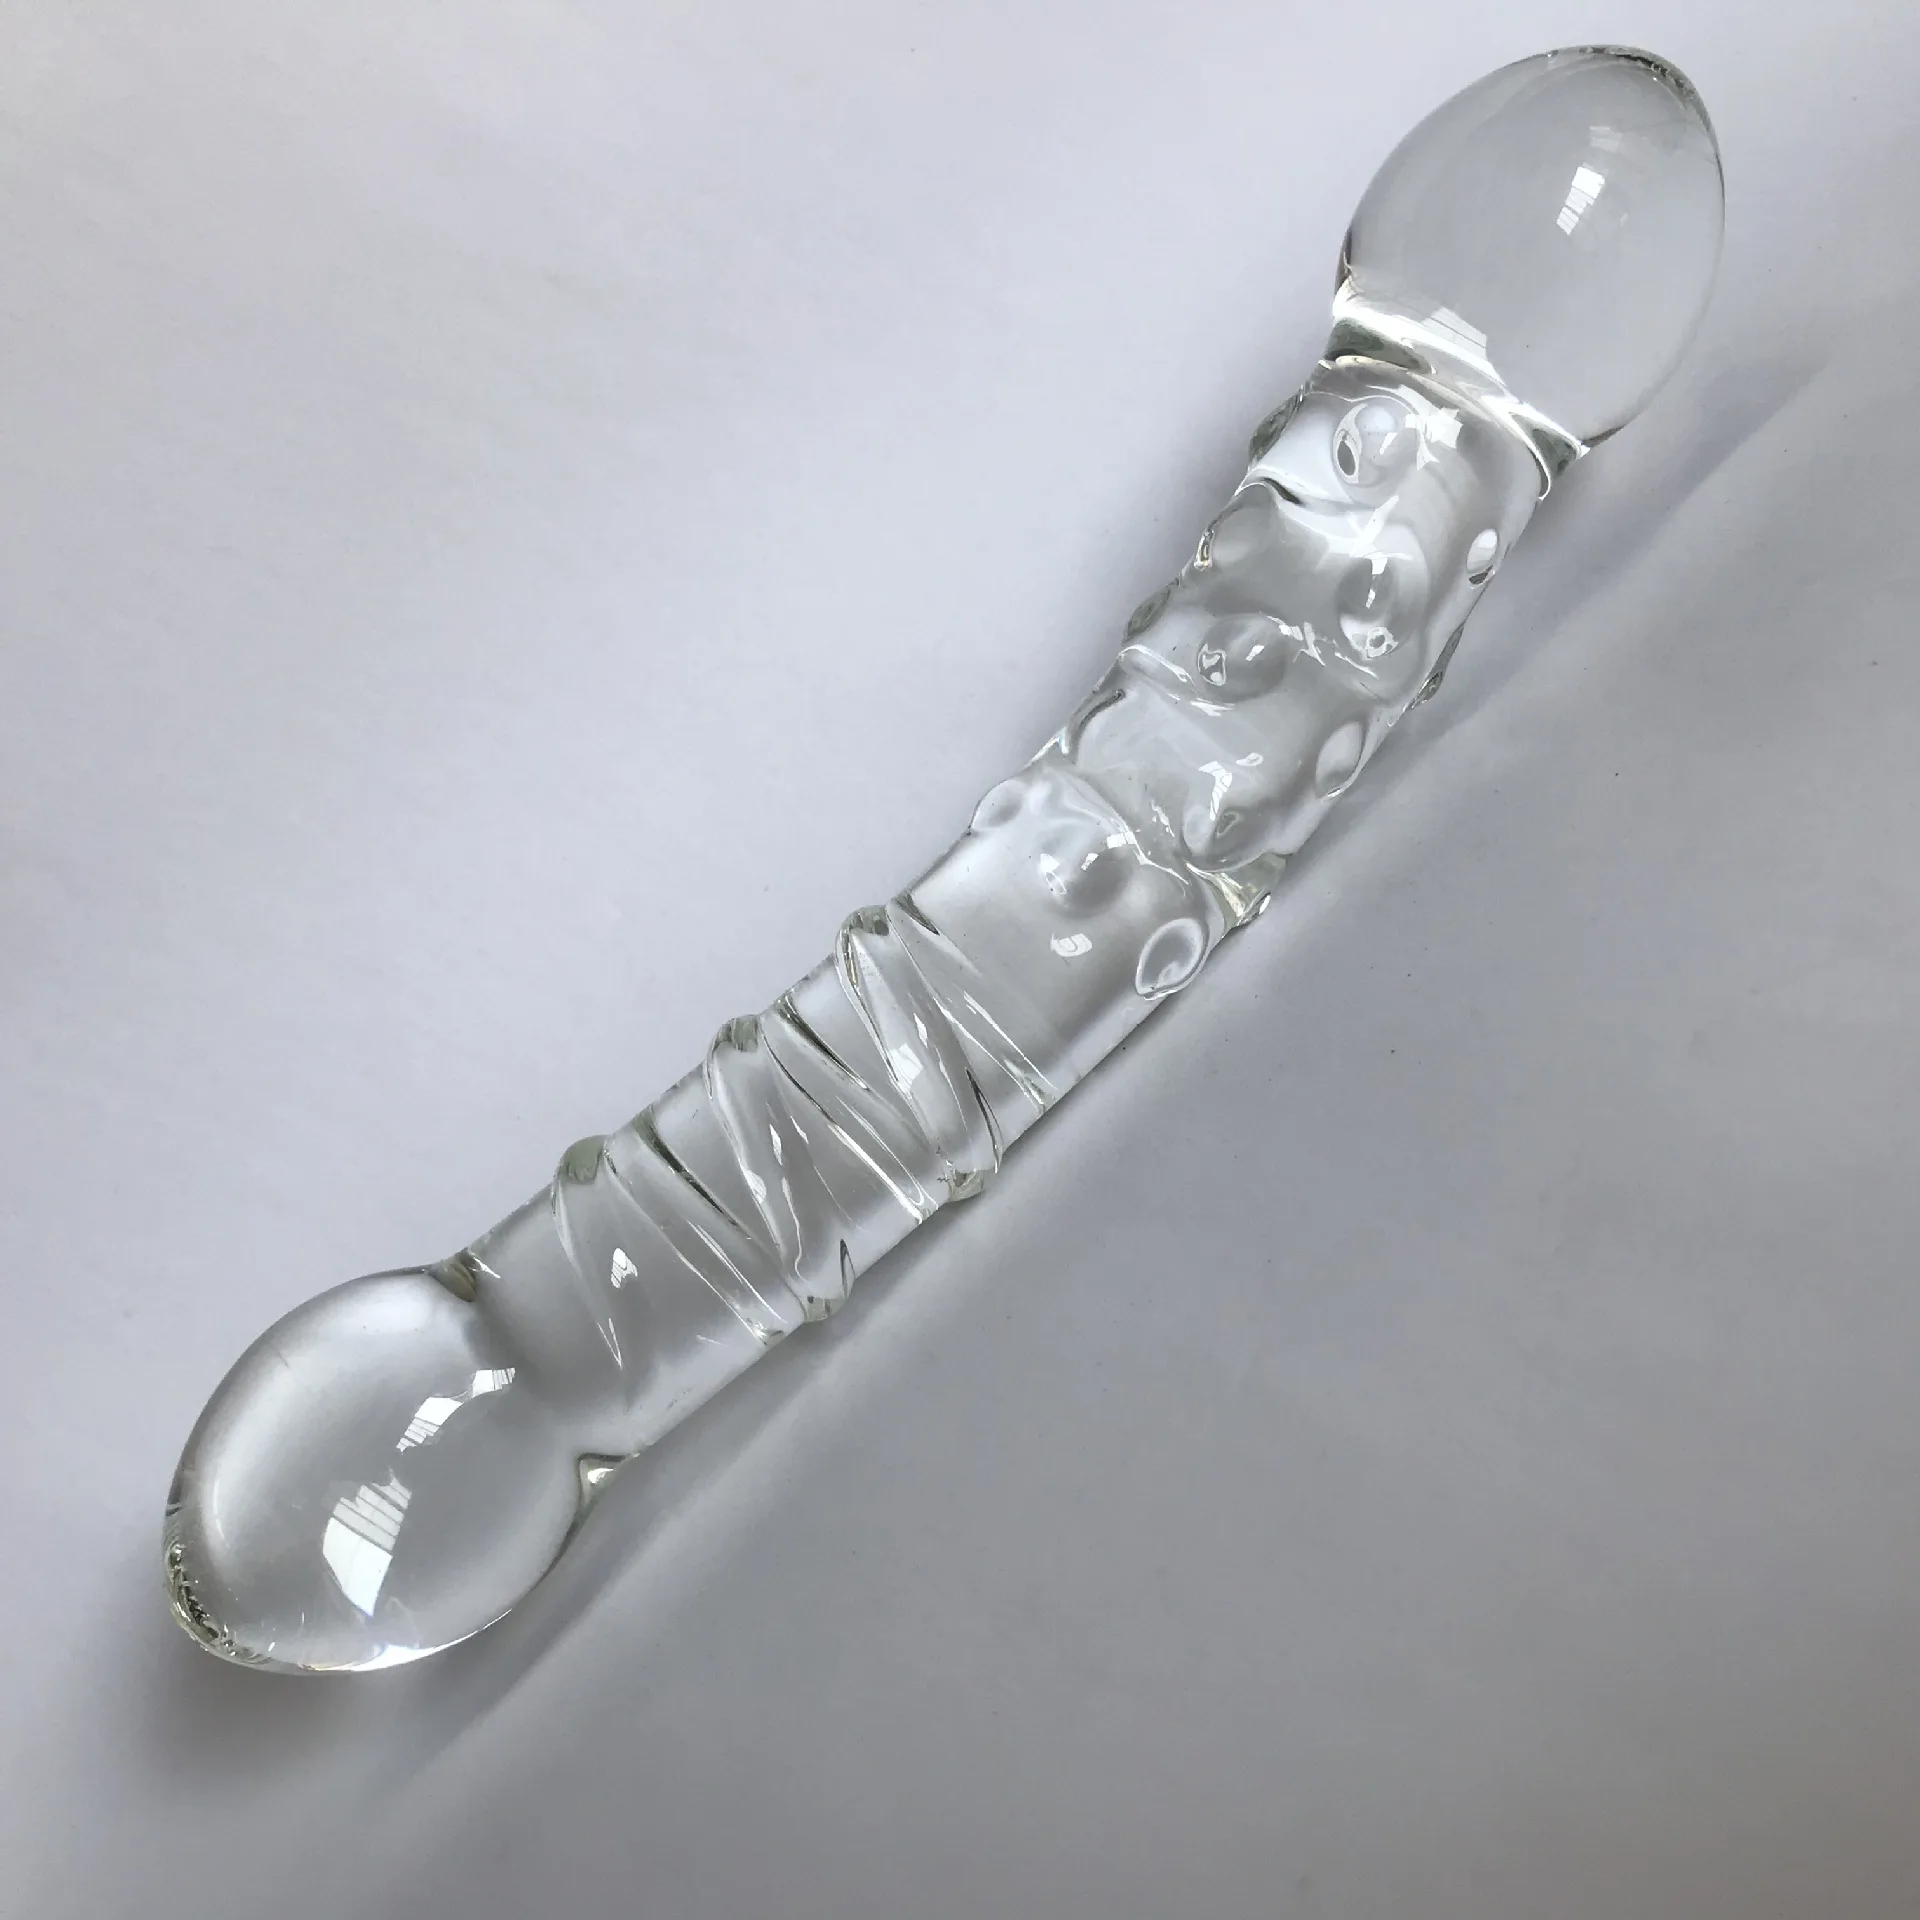 Custom Double Headed Dildo Pyrex Glass Crystal Fake Penis Anal Butt Plug Female Male Adult Masturbation Sex Toy for Women Men Gay Hf5885b209ab44d4183fd4967167a67ecP